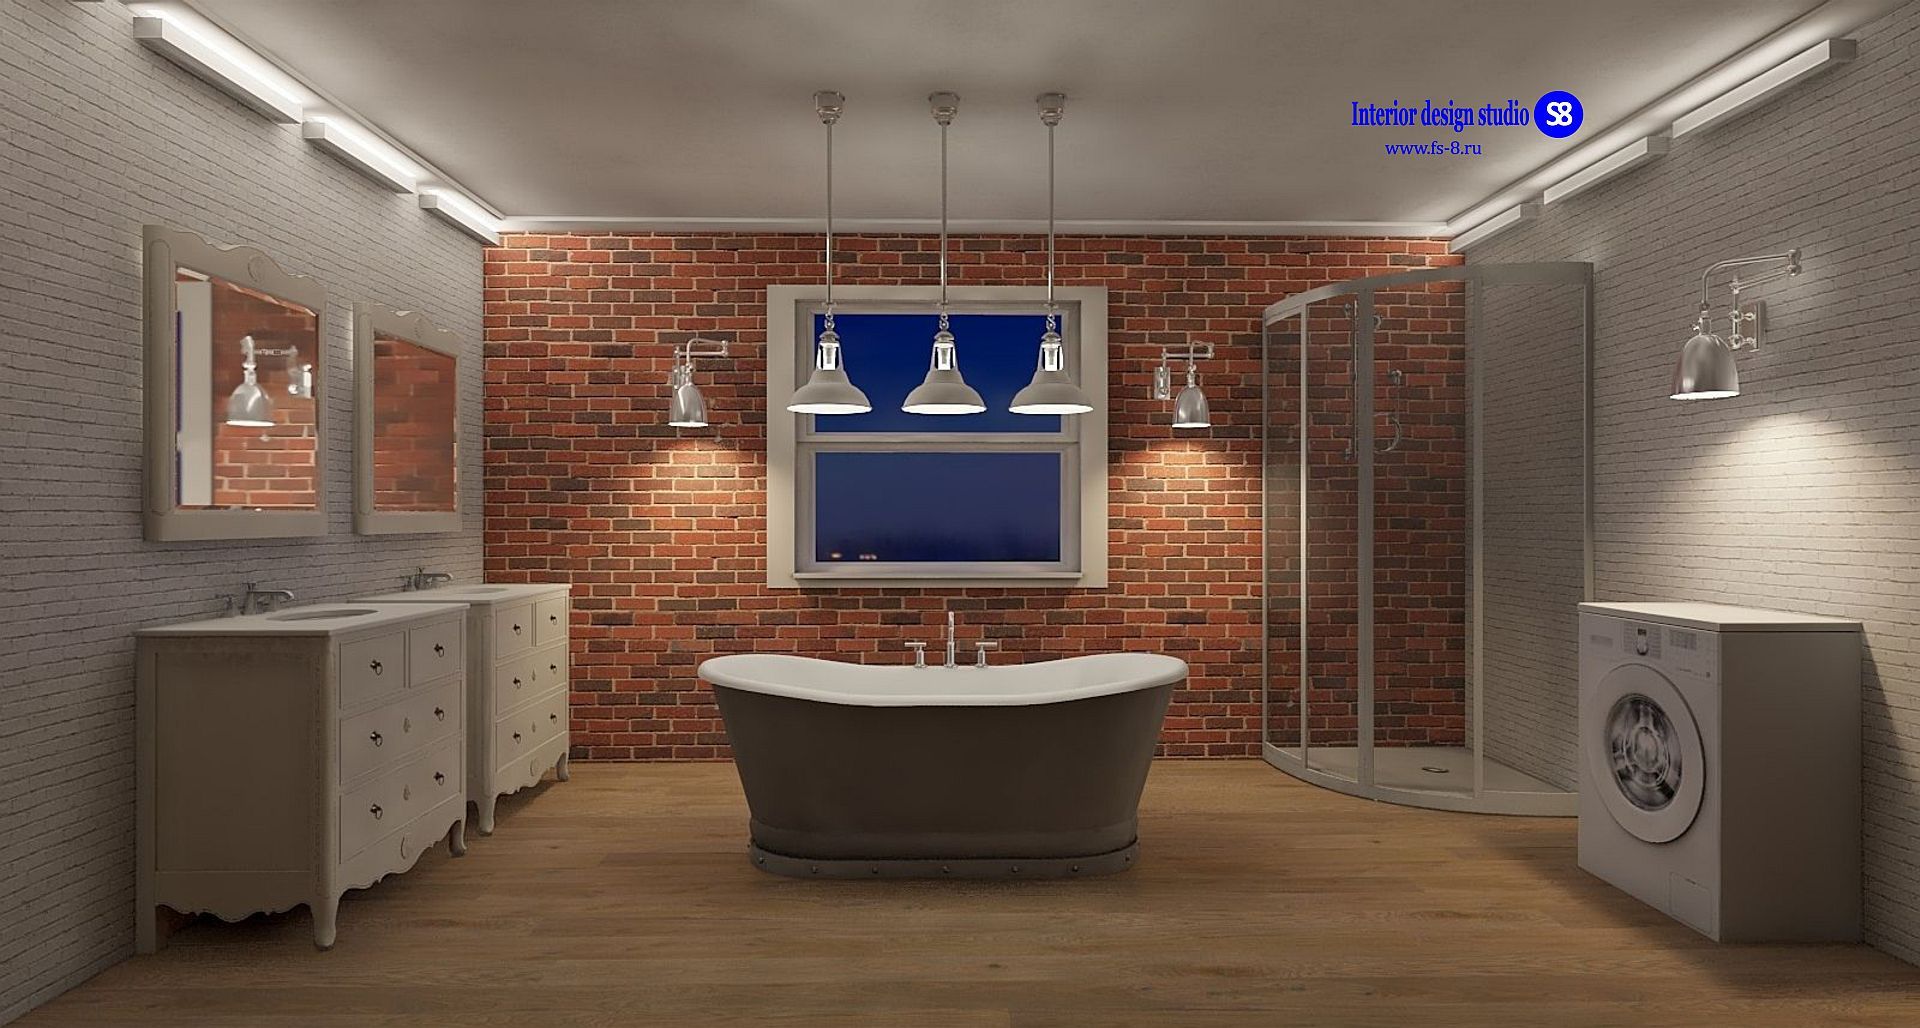 Bathroom in Loft Style 'Design studio S-8' Industrial style bathroom